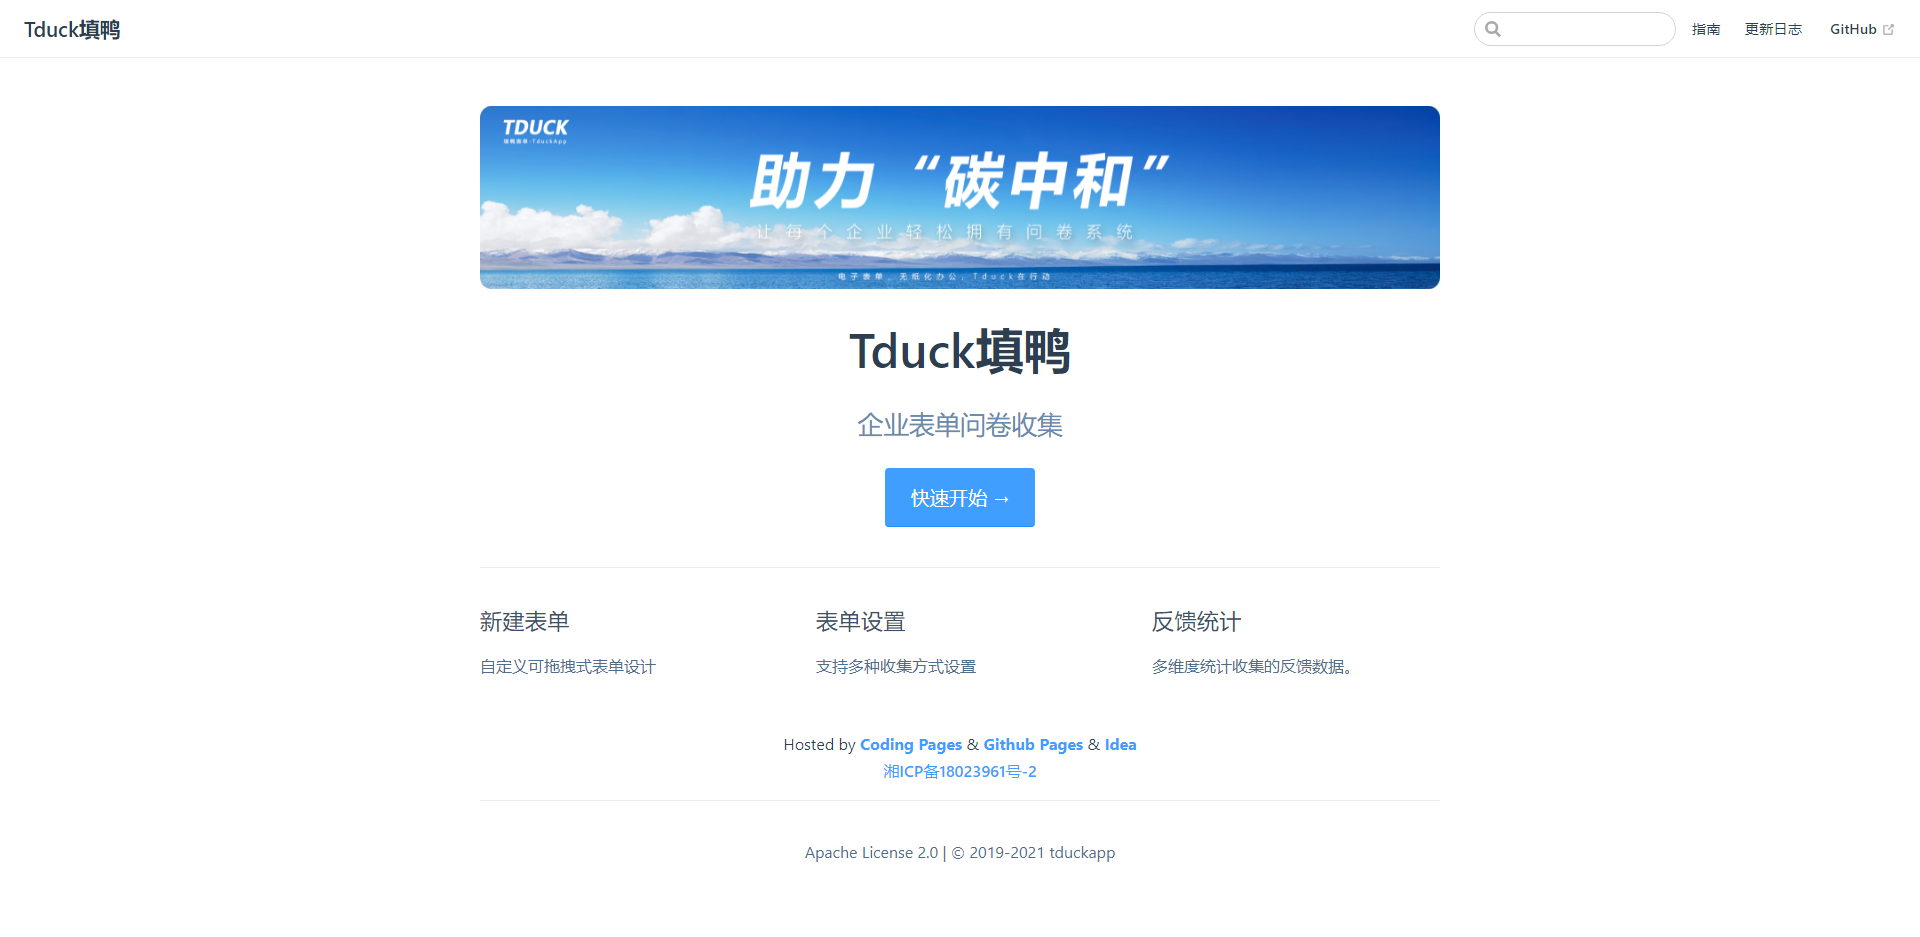 Tduck-填鸭收集器是一款Java开源的表单在线收集系统 -静鱼客栈